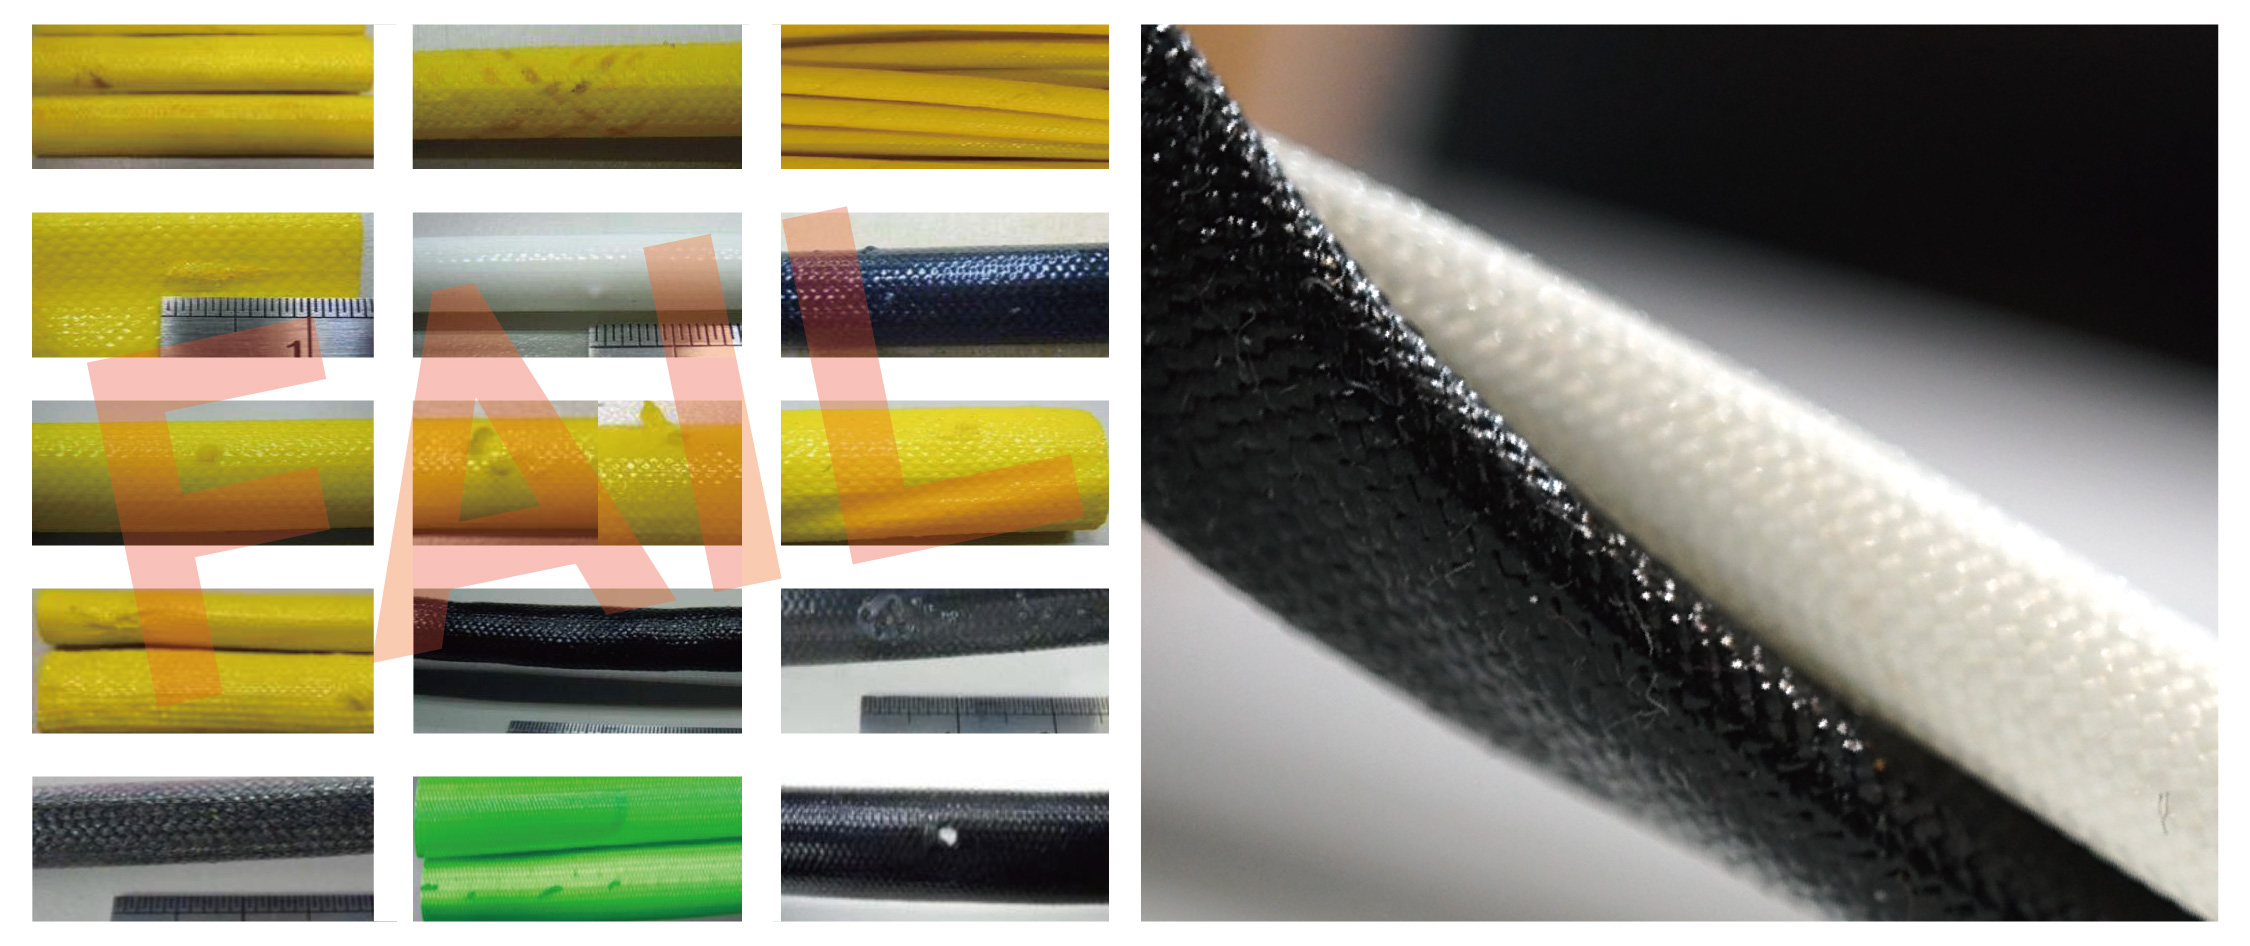 Comparison of Low-Quality Fiberglass Sleeves and Good Gi High-Quality Fiberglass Tubes